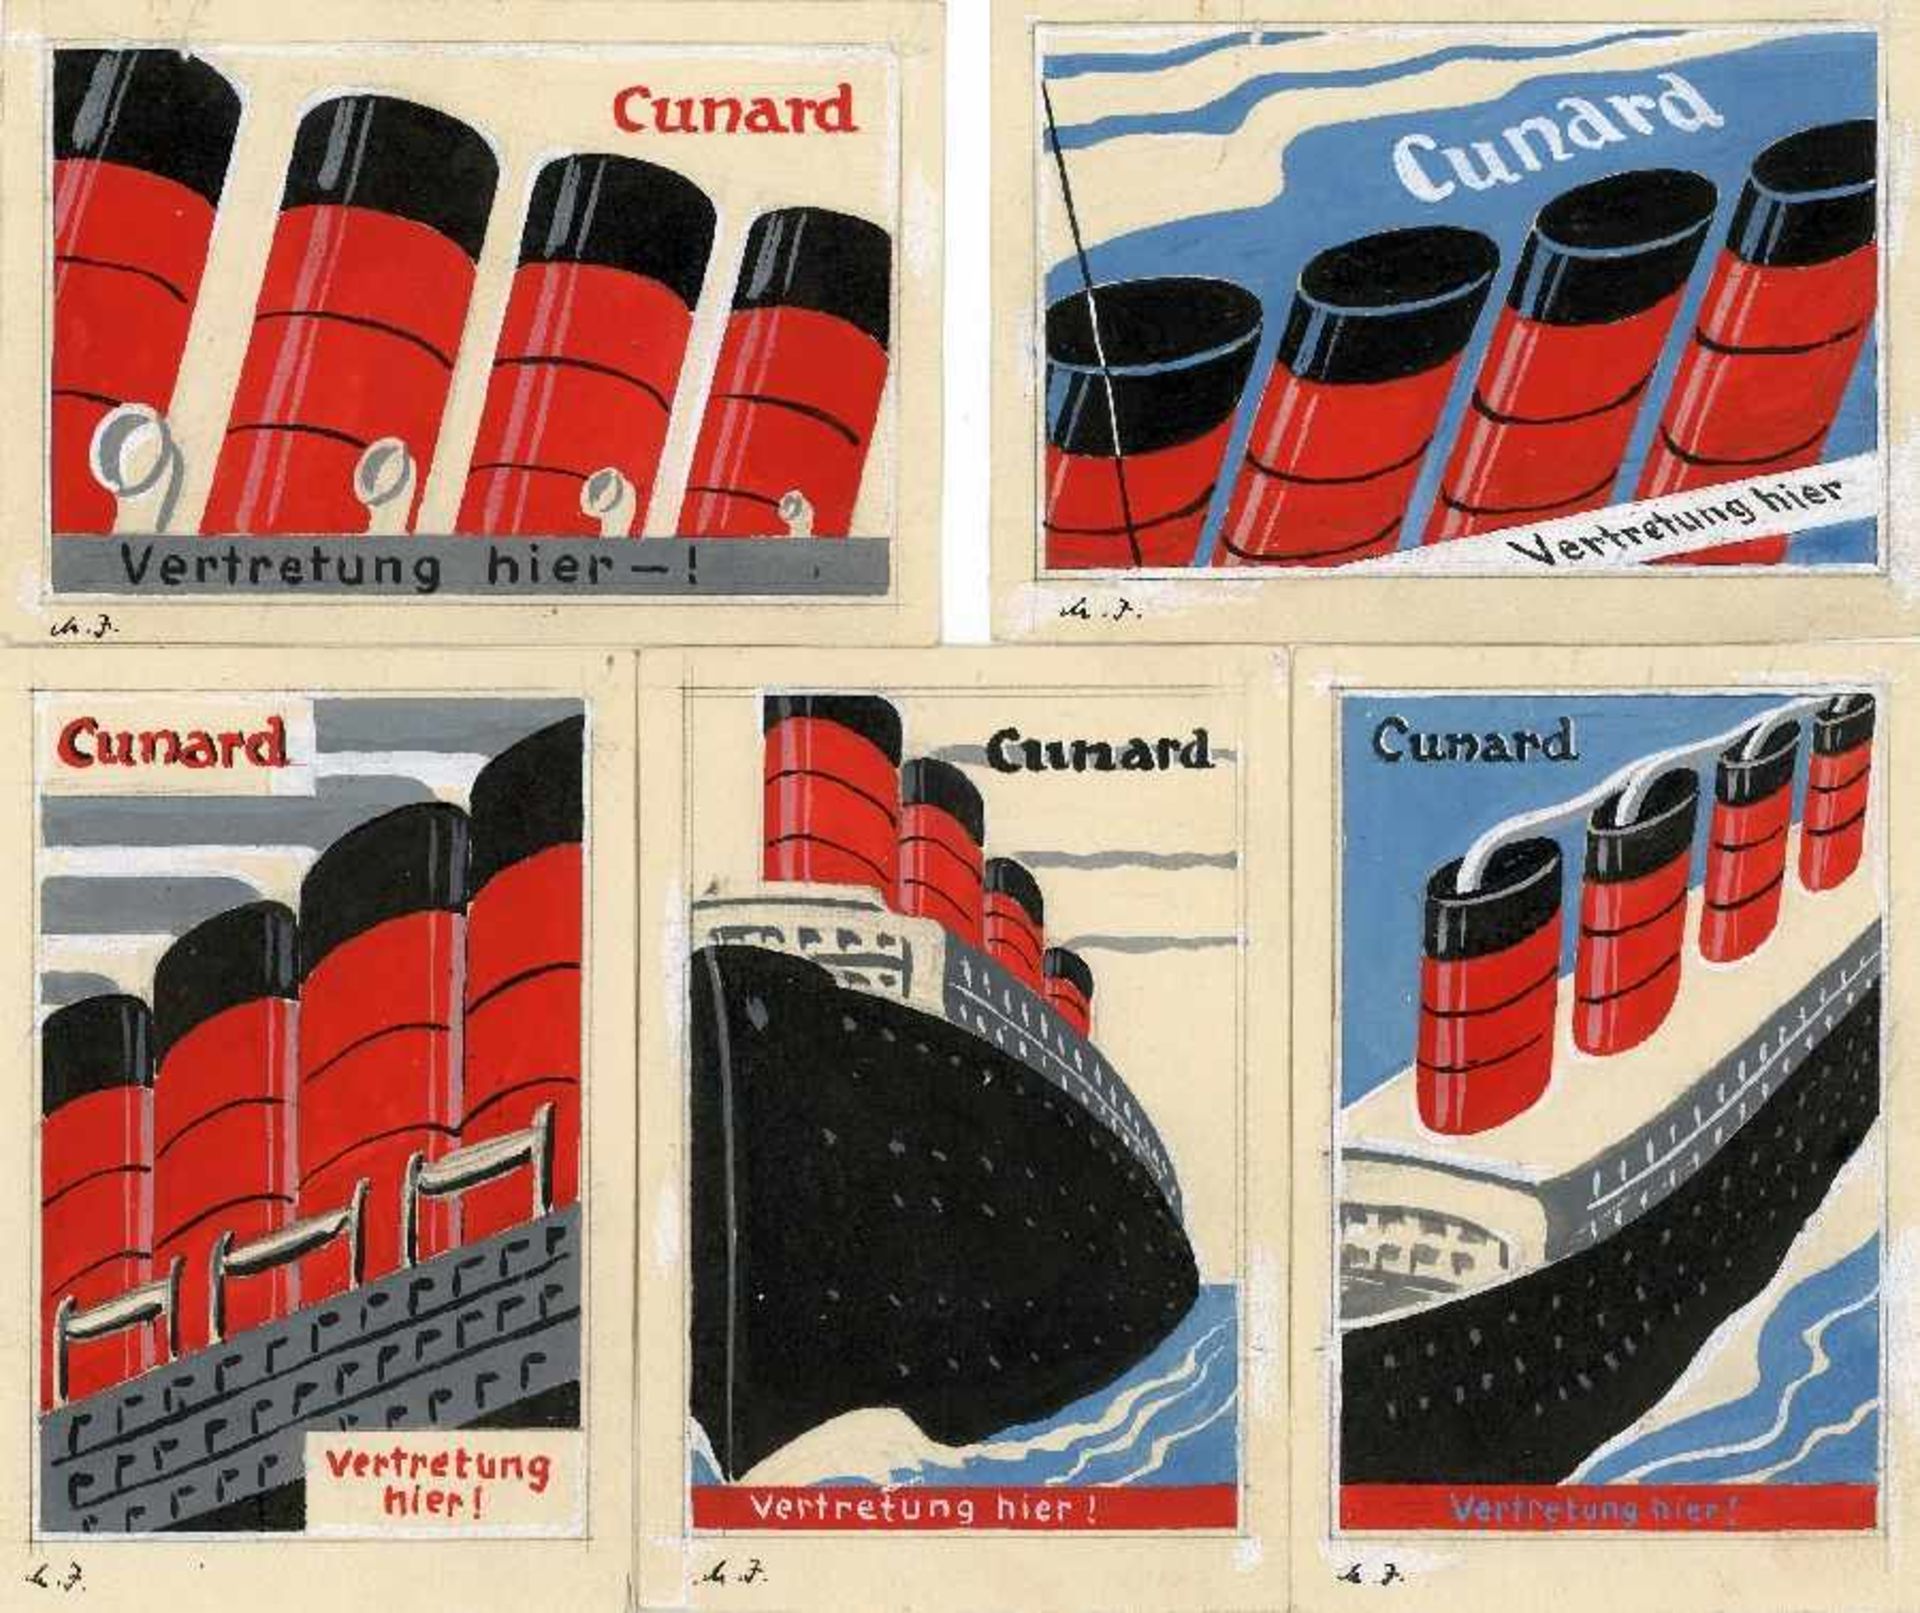 Michael JungheimDüsseldorf 1896 - 1970Advertising designs for the Cunard shipping company5